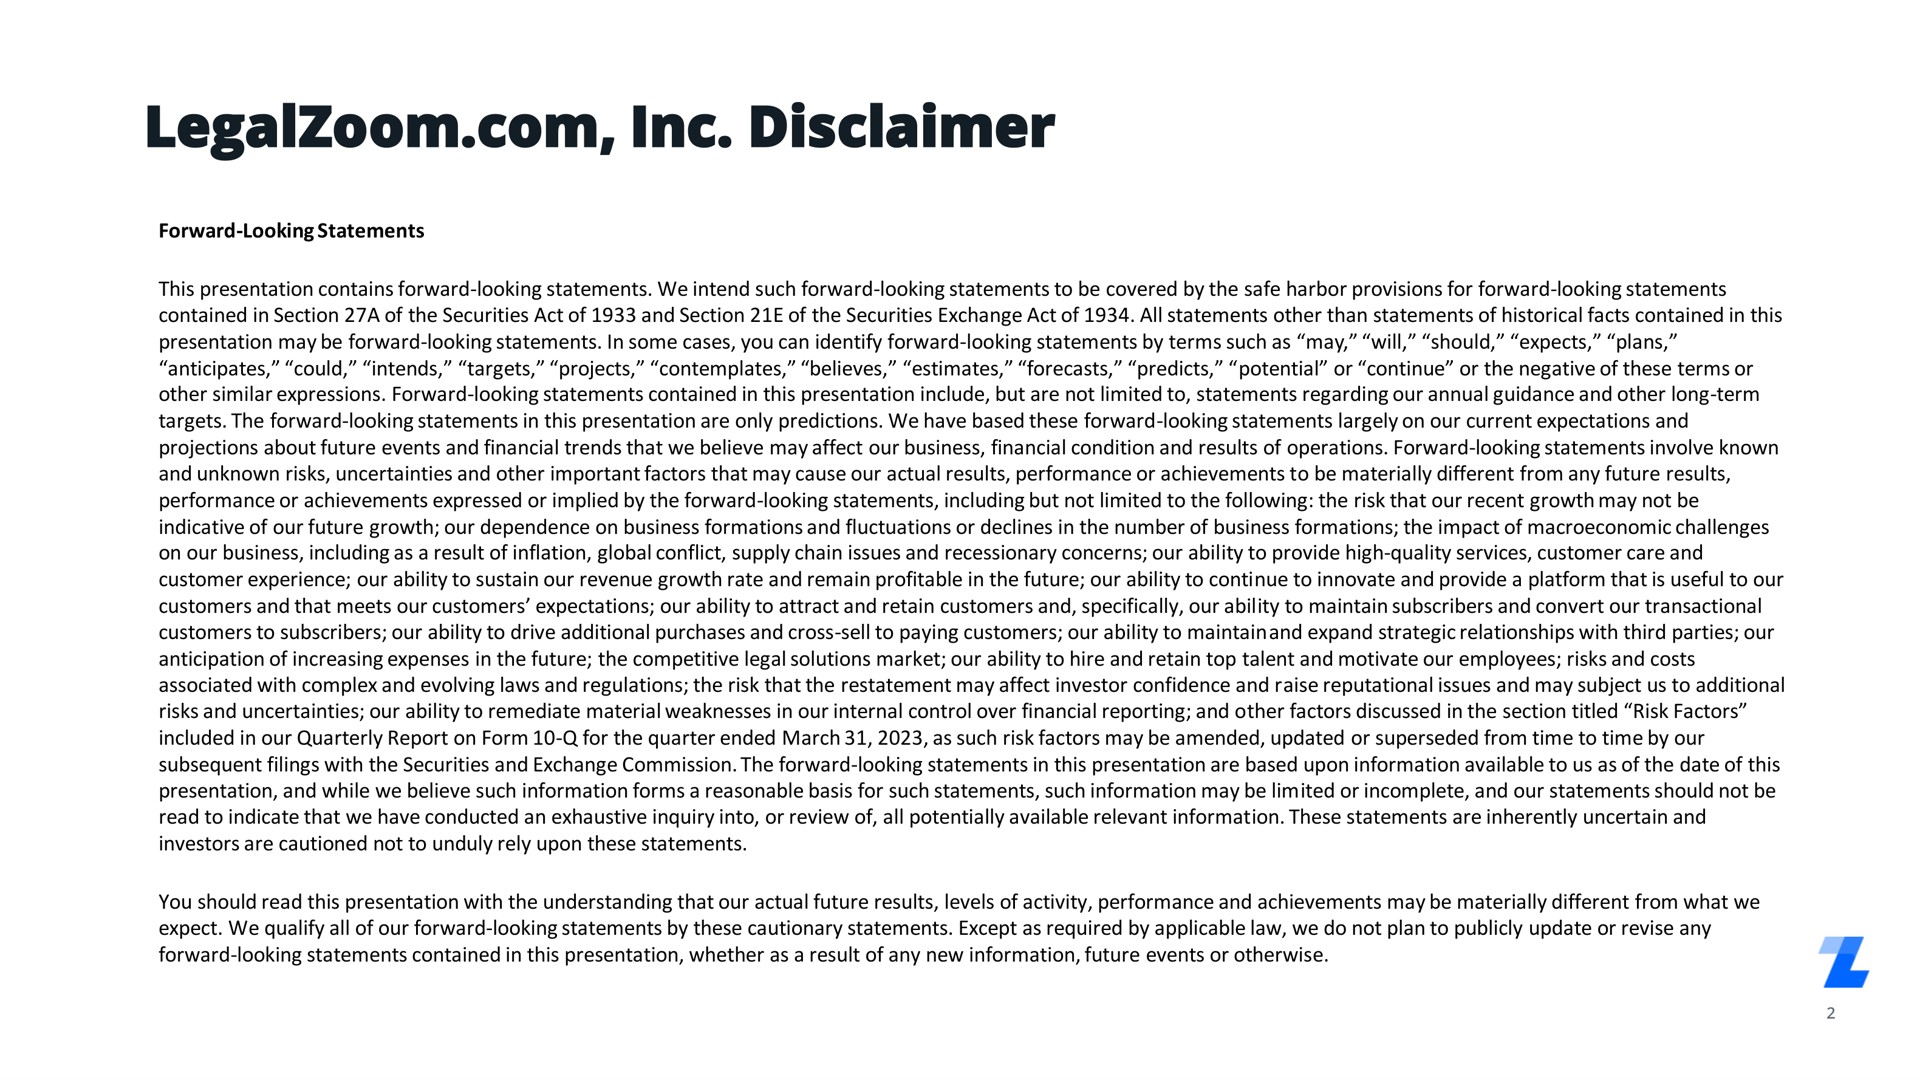 disclaimer | LegalZoom.com